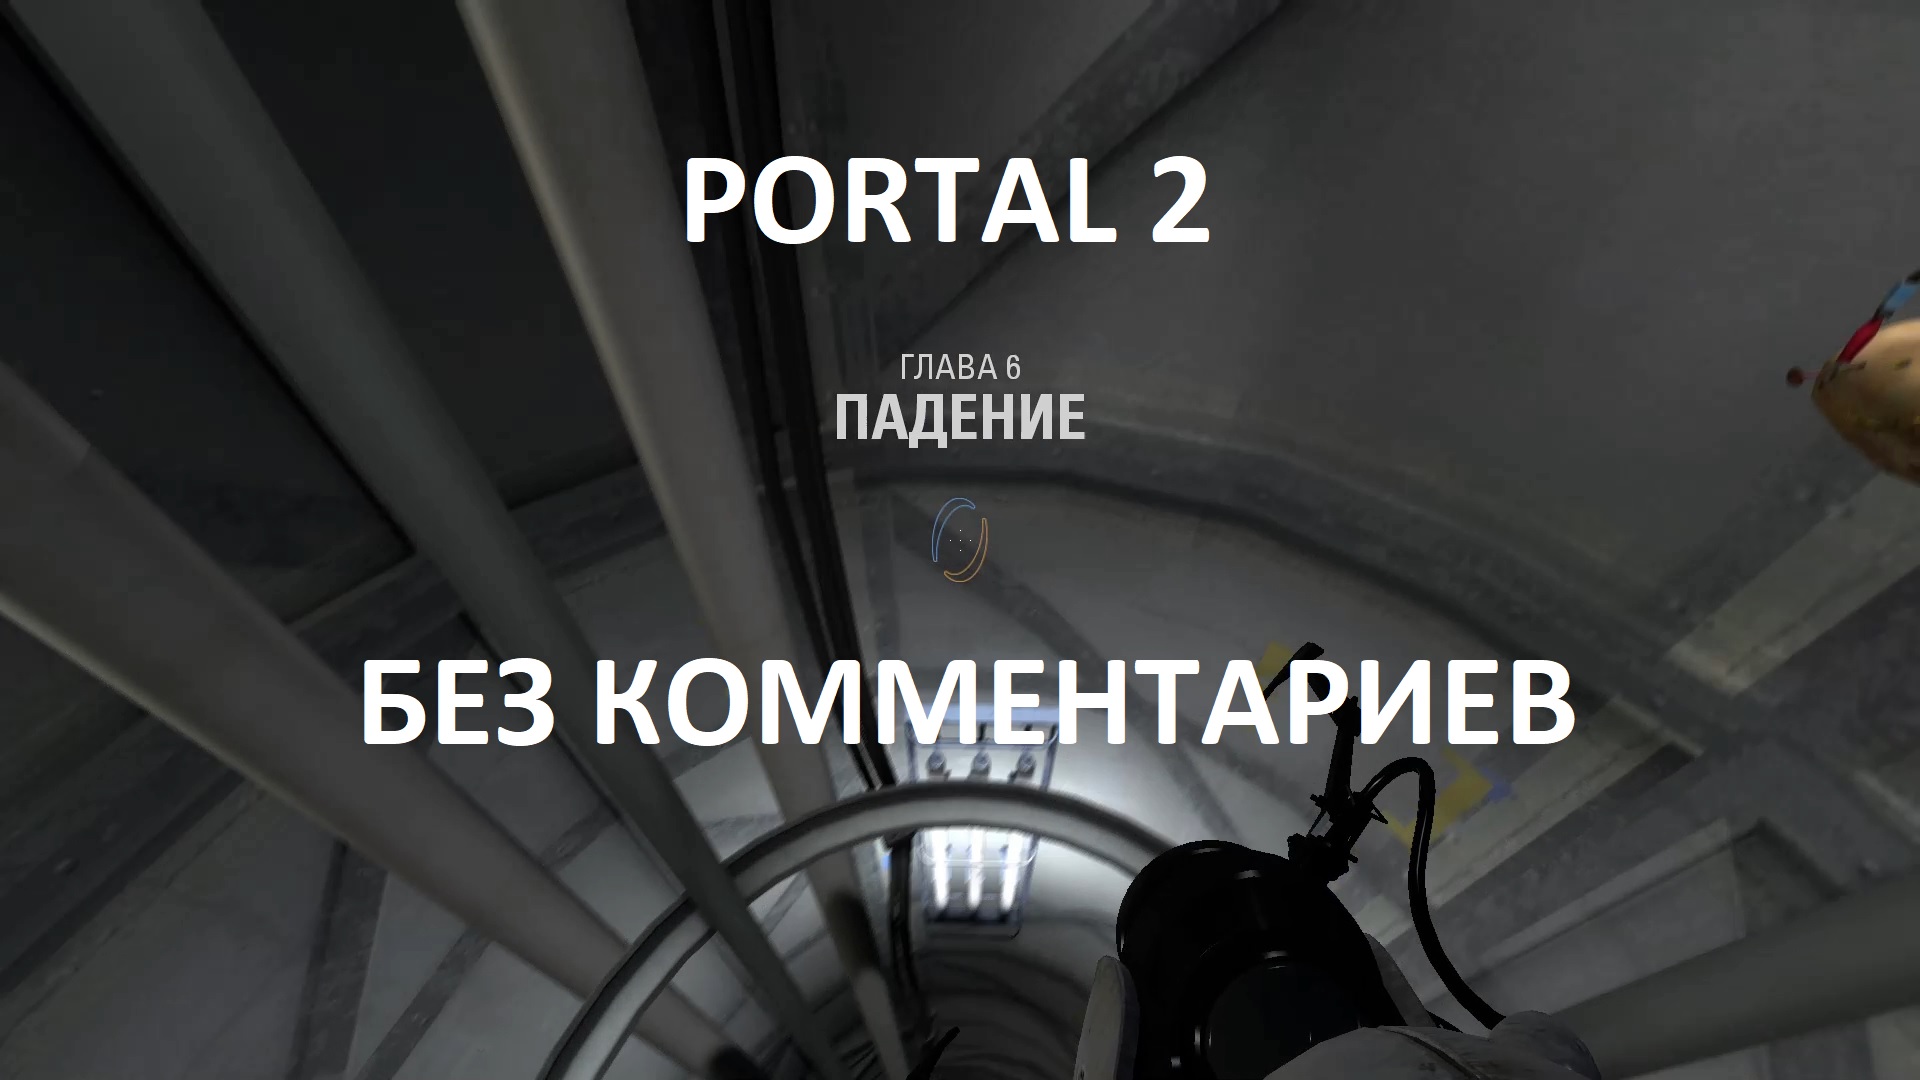 Portal 2 как пройти 6 уровень кооператив фото 38